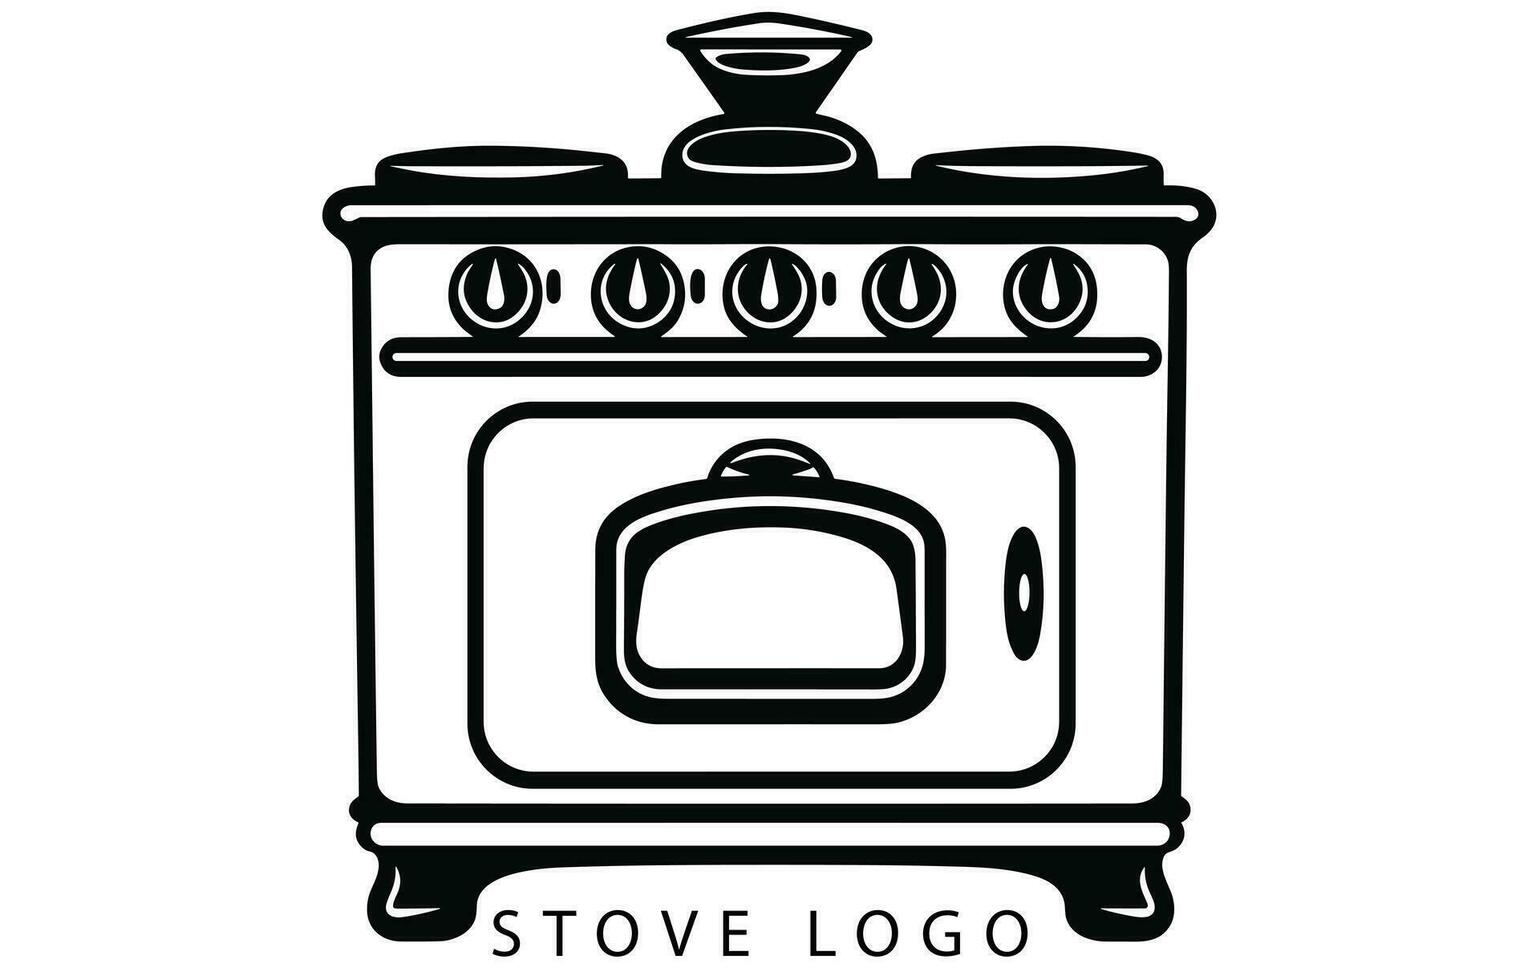 Stove icon logo vector design